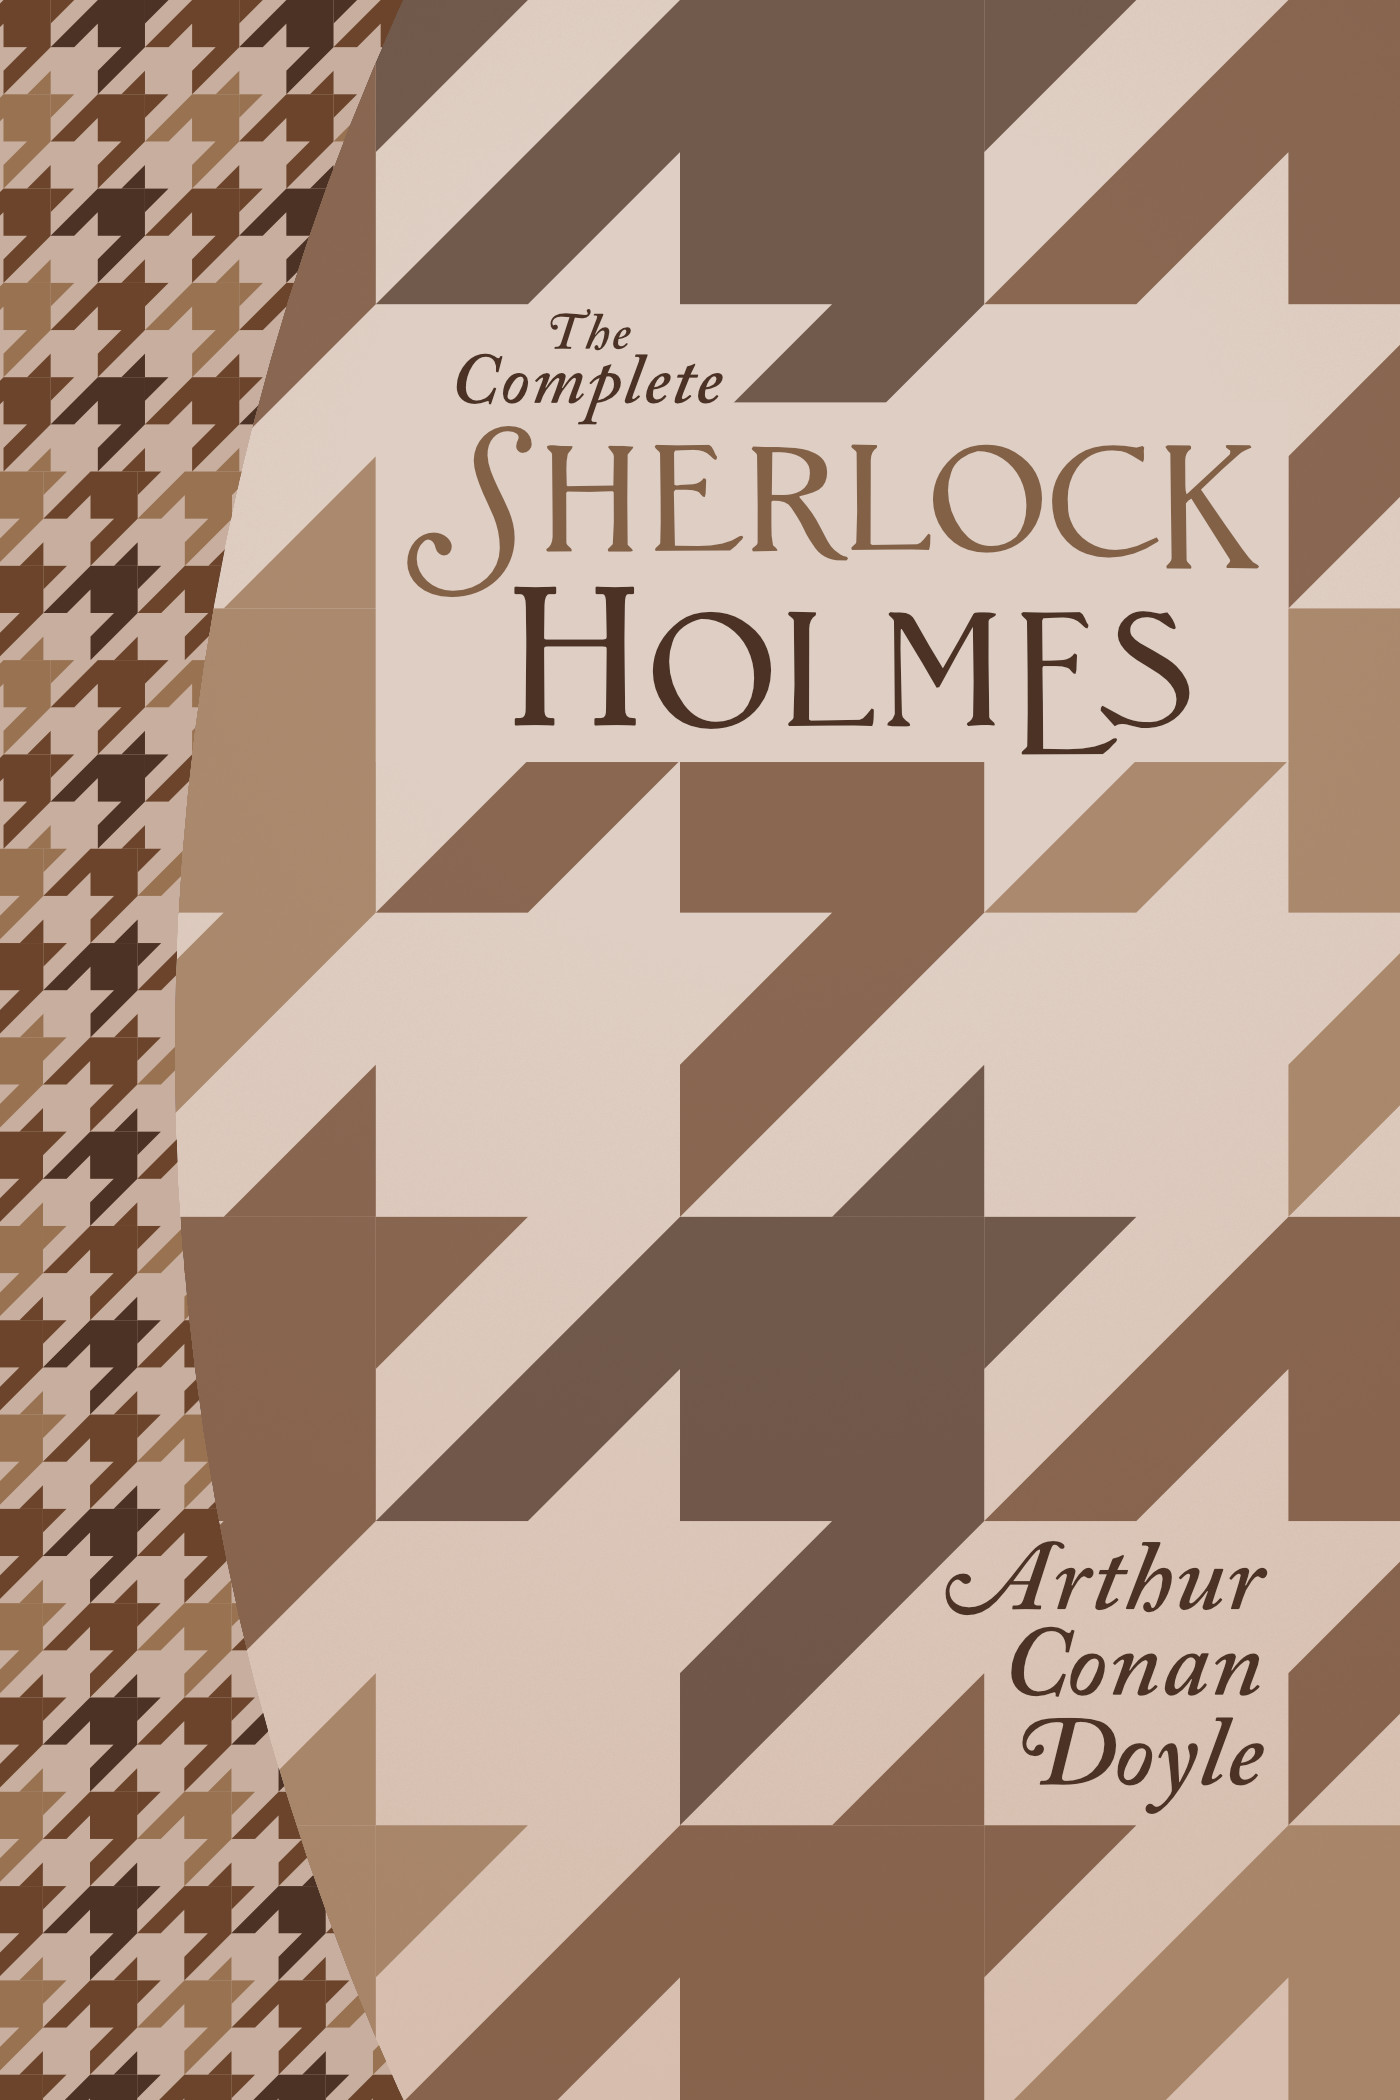 Complete Sherlock Holmes by Arthur Conan Doyle